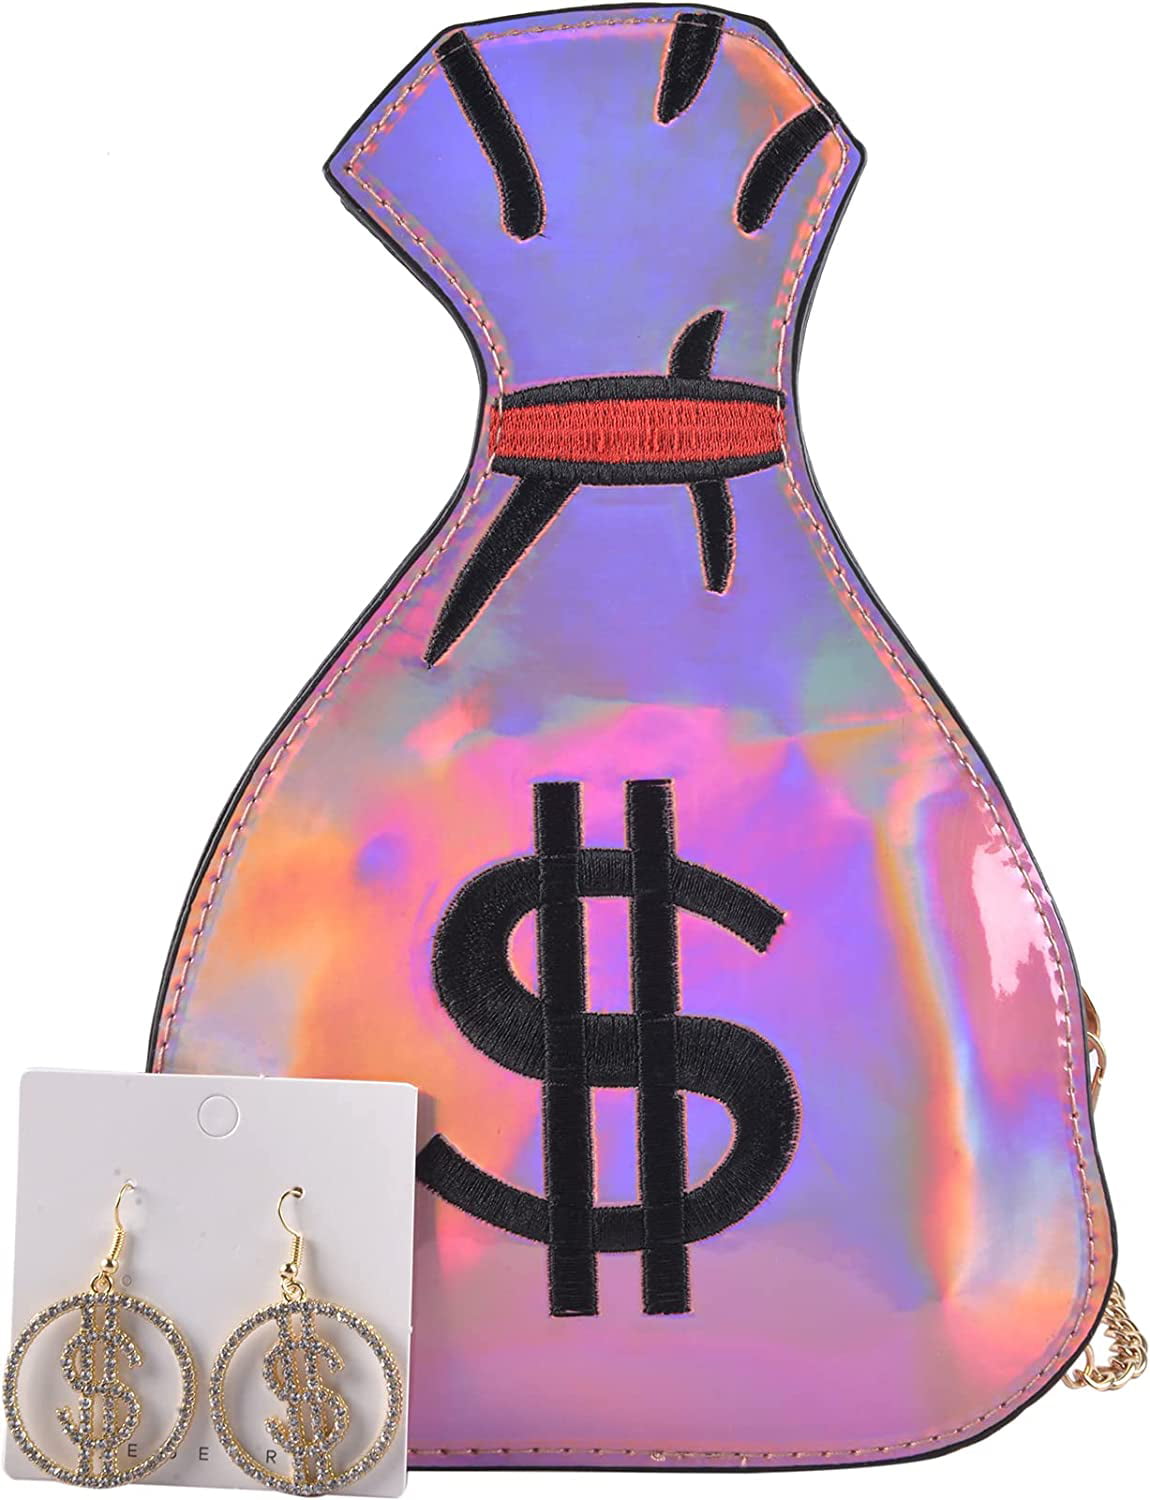 YOUI GIFTS Money Bag Design Shoulder Bag with Dollar Earring PU Laser Purse Handbag Clear Diamond Shape Crossbody Messenger Bag 8e4a61ff 7087 4a35 9017 cbc034be65d9.f0c7d7a4015b09bb6eb50a4c37a21f74